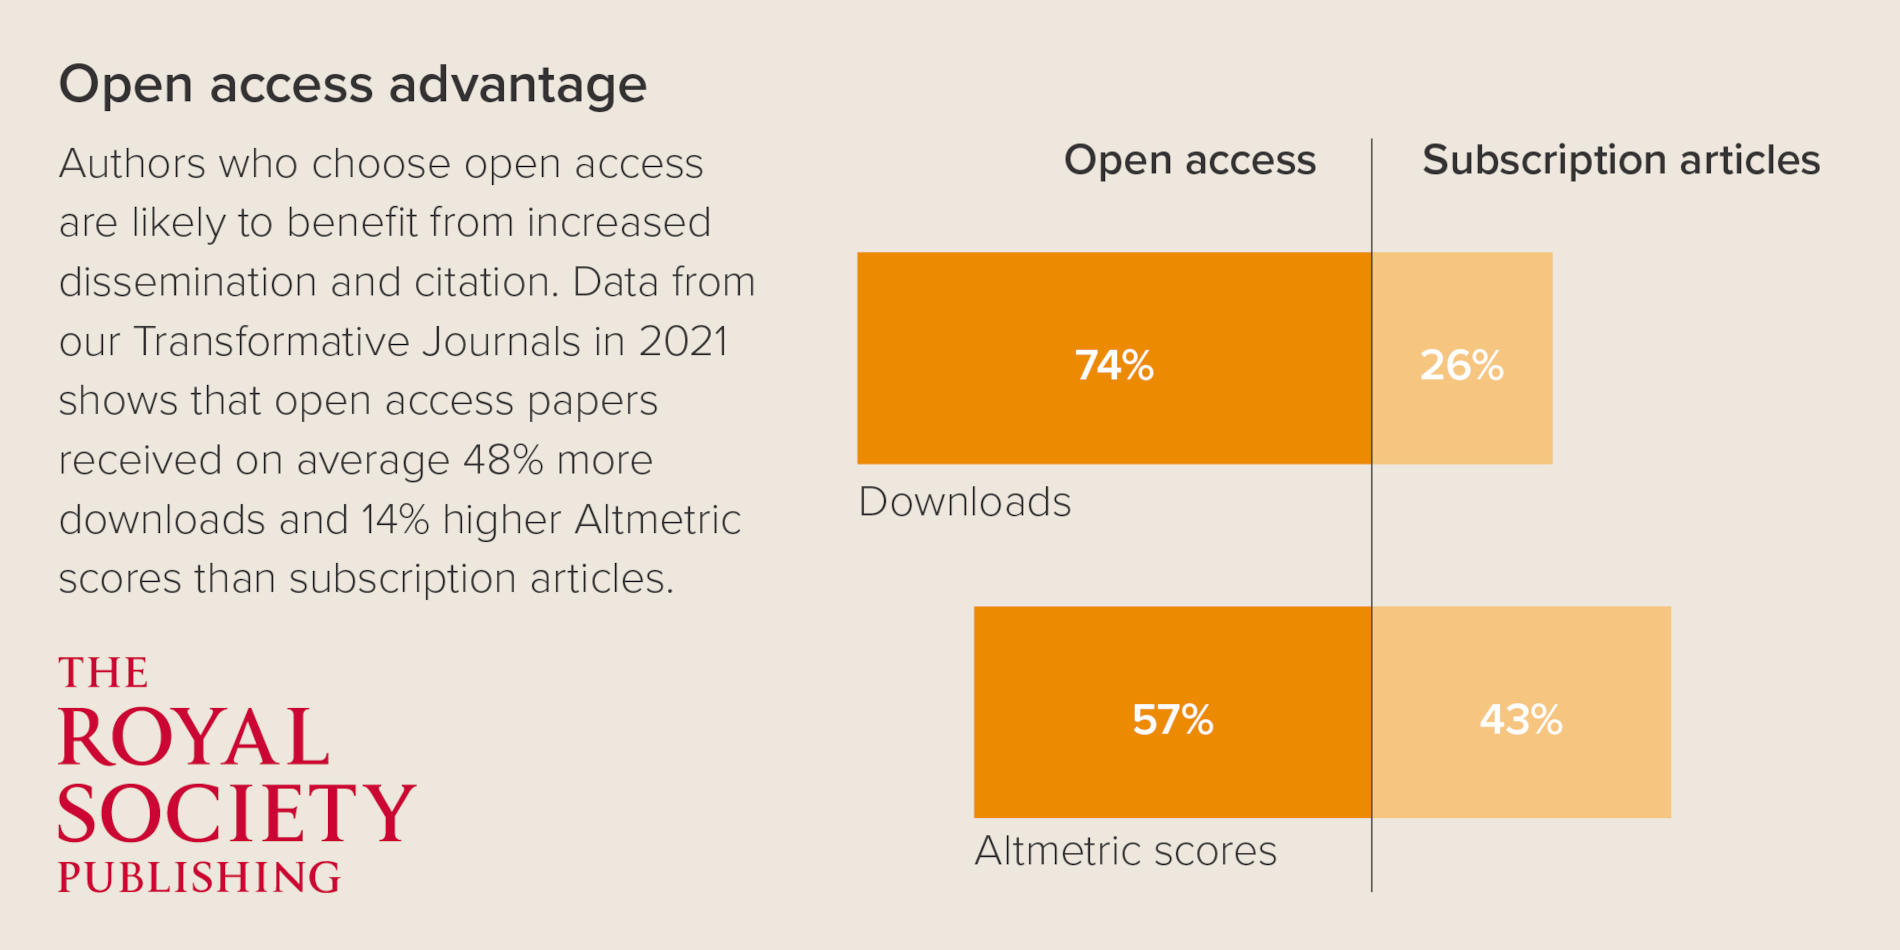 Open access advantage